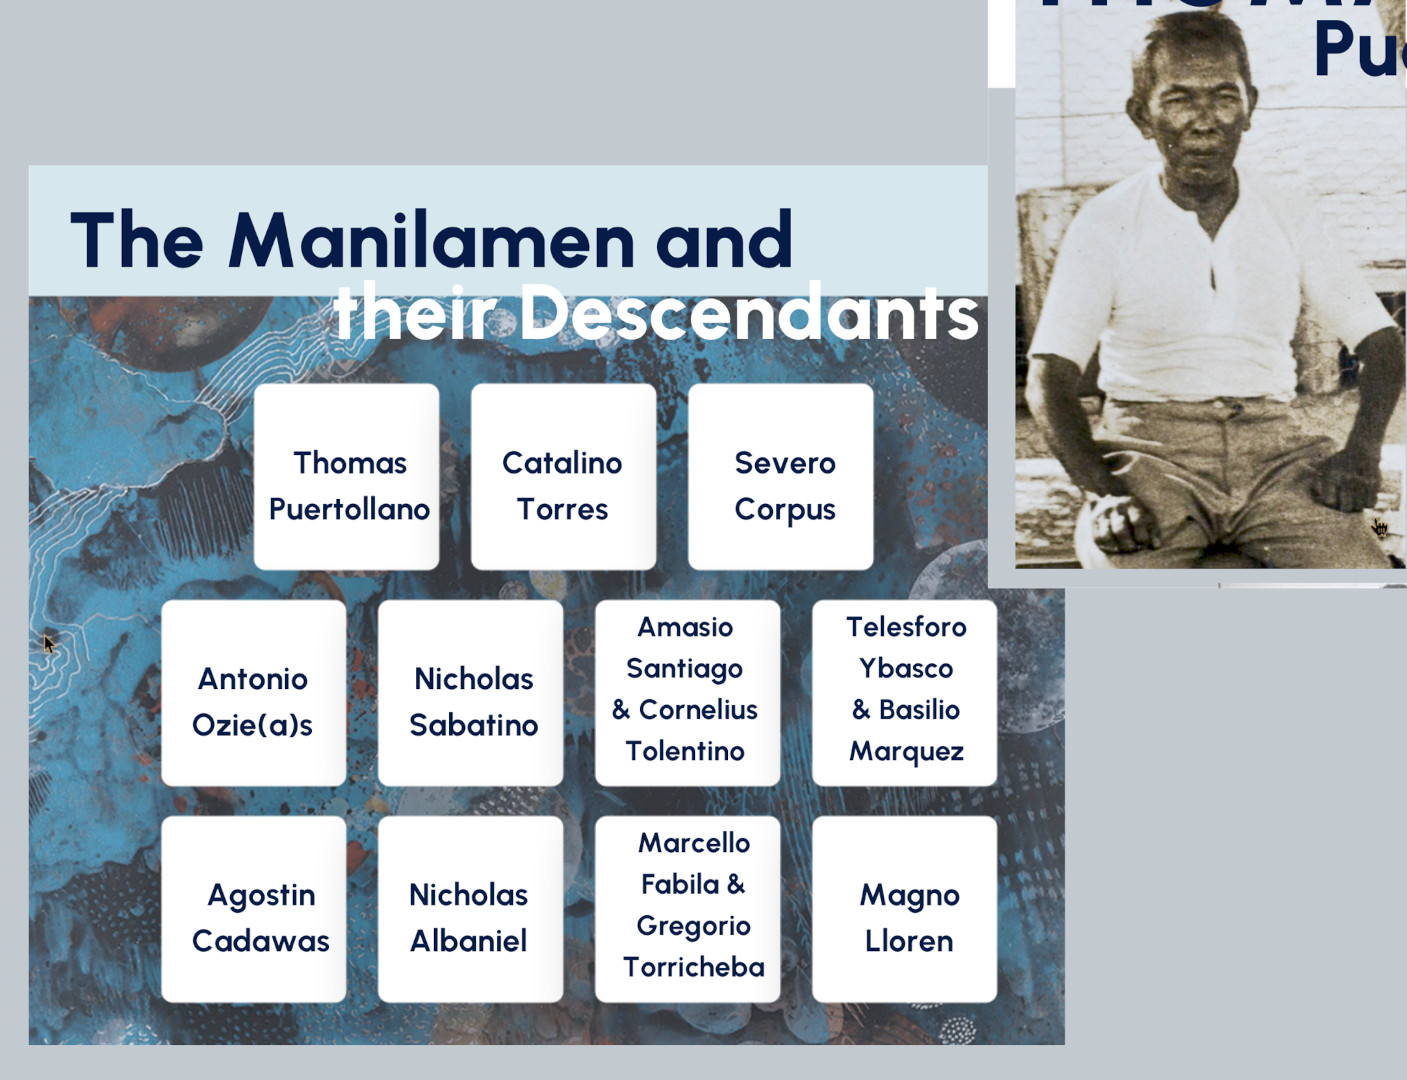 Manilamen (Thomas Puertollano, insert) and their Descendants